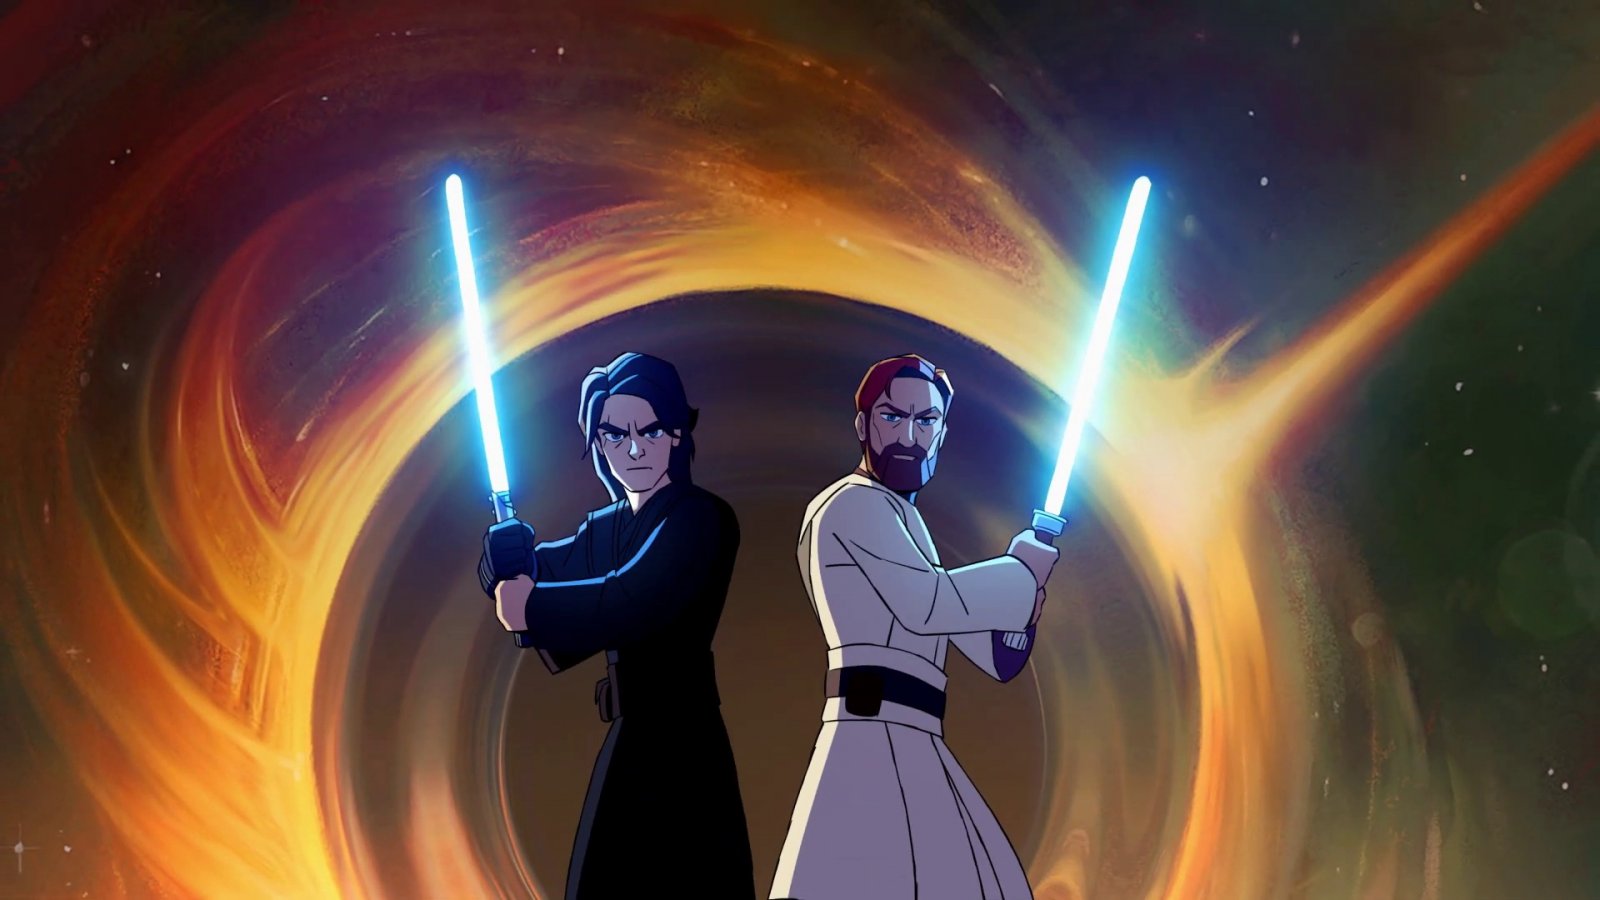 Brawlhalla x Star Wars: data di uscita del cross-over, introdurrà Anakin e Obi-Wan